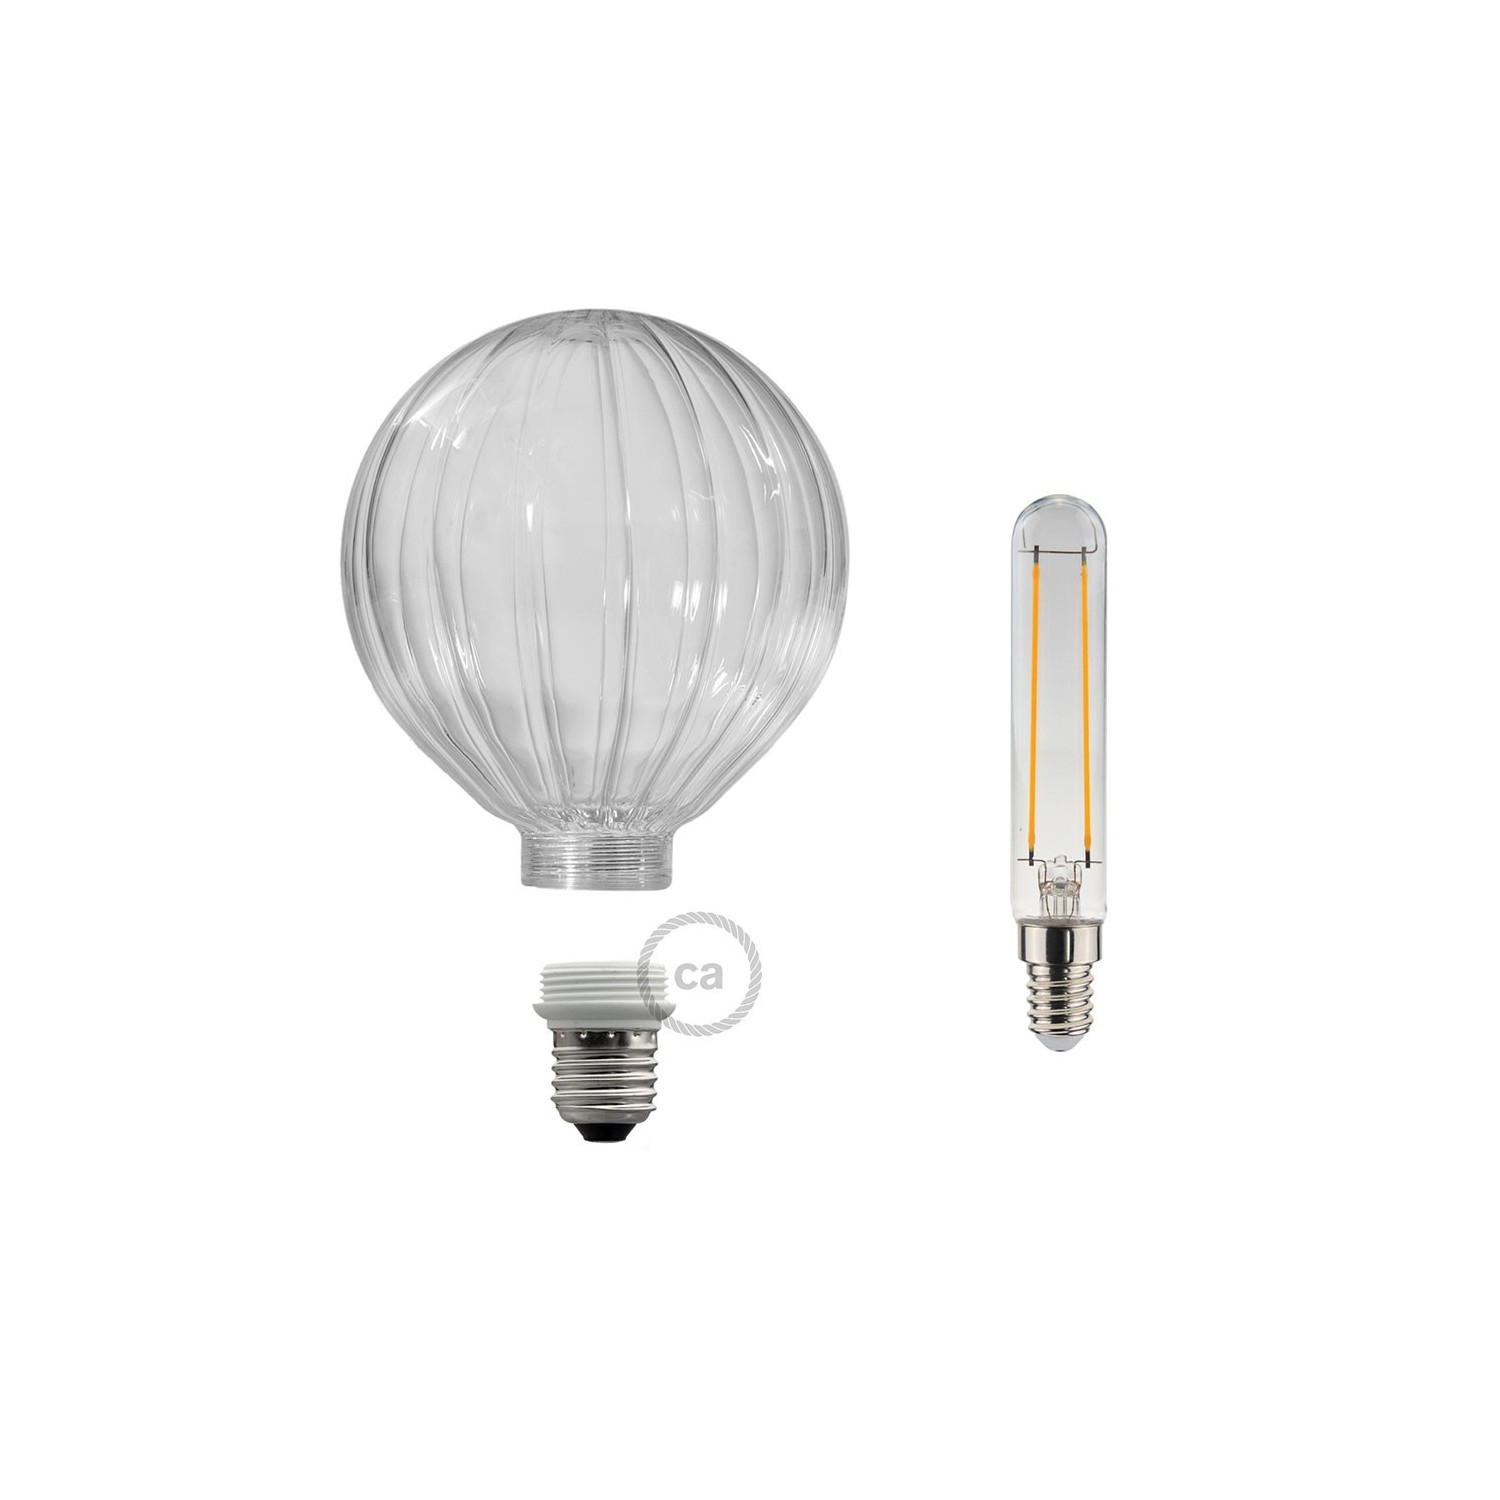 Bombillo Decorativa Modular LED G125 en vidrio trasparente silueta globo de 5W en luz cálida - KG125140SLFC01